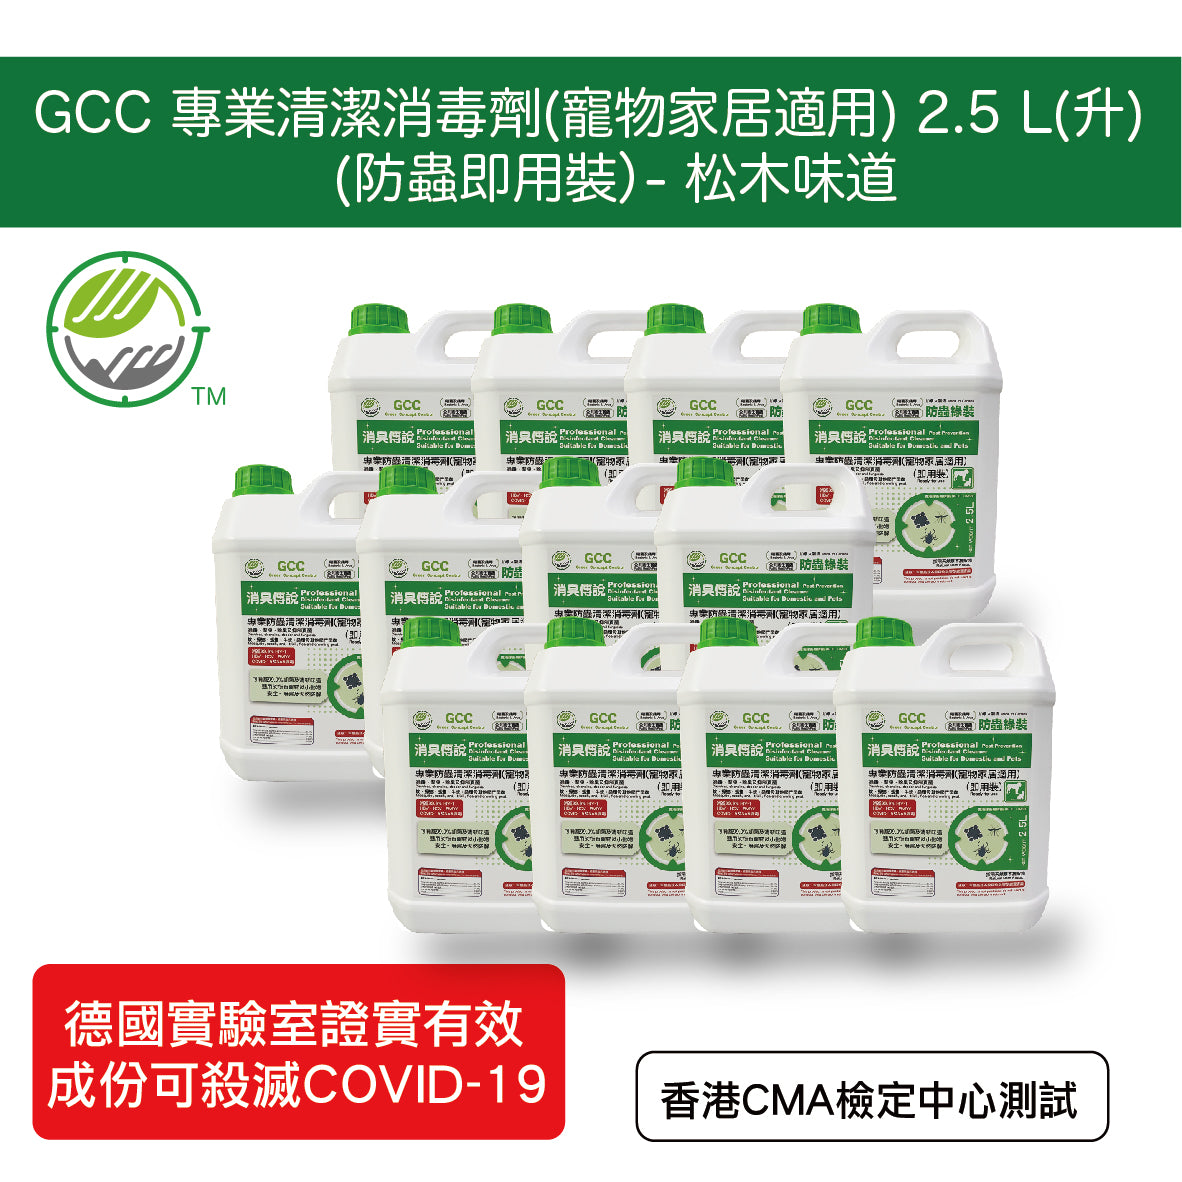 GCC 專業清潔消毒劑(寵物家居適用) 防蟲綠裝 2.5L